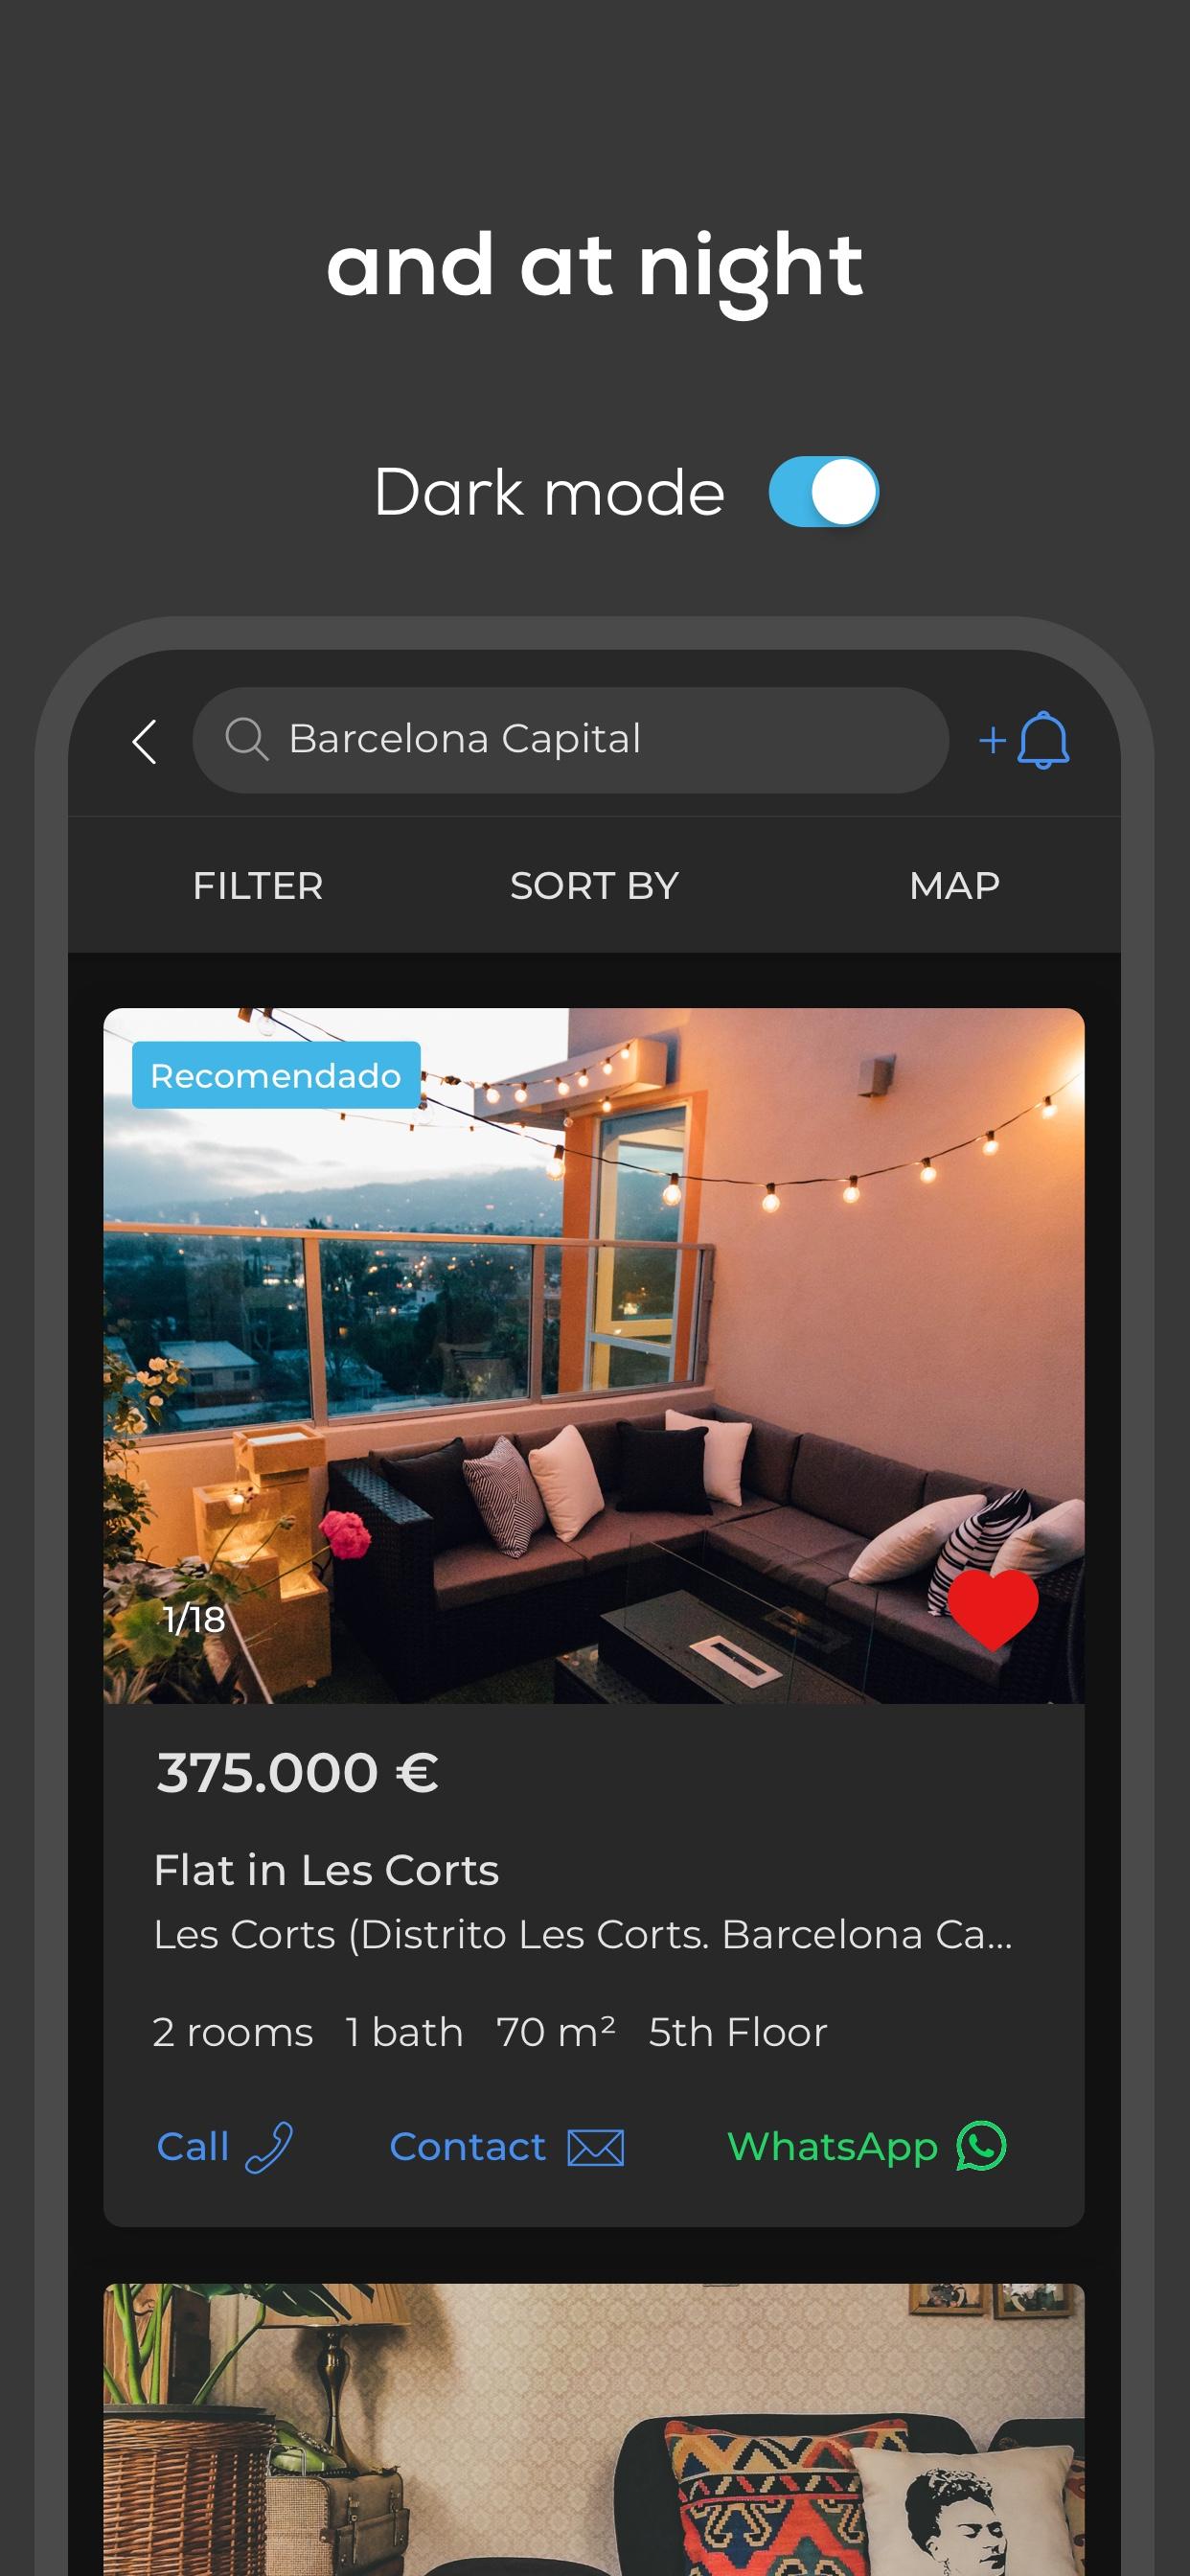 pisos.com flats and houses 2.4.2 Screenshot 6